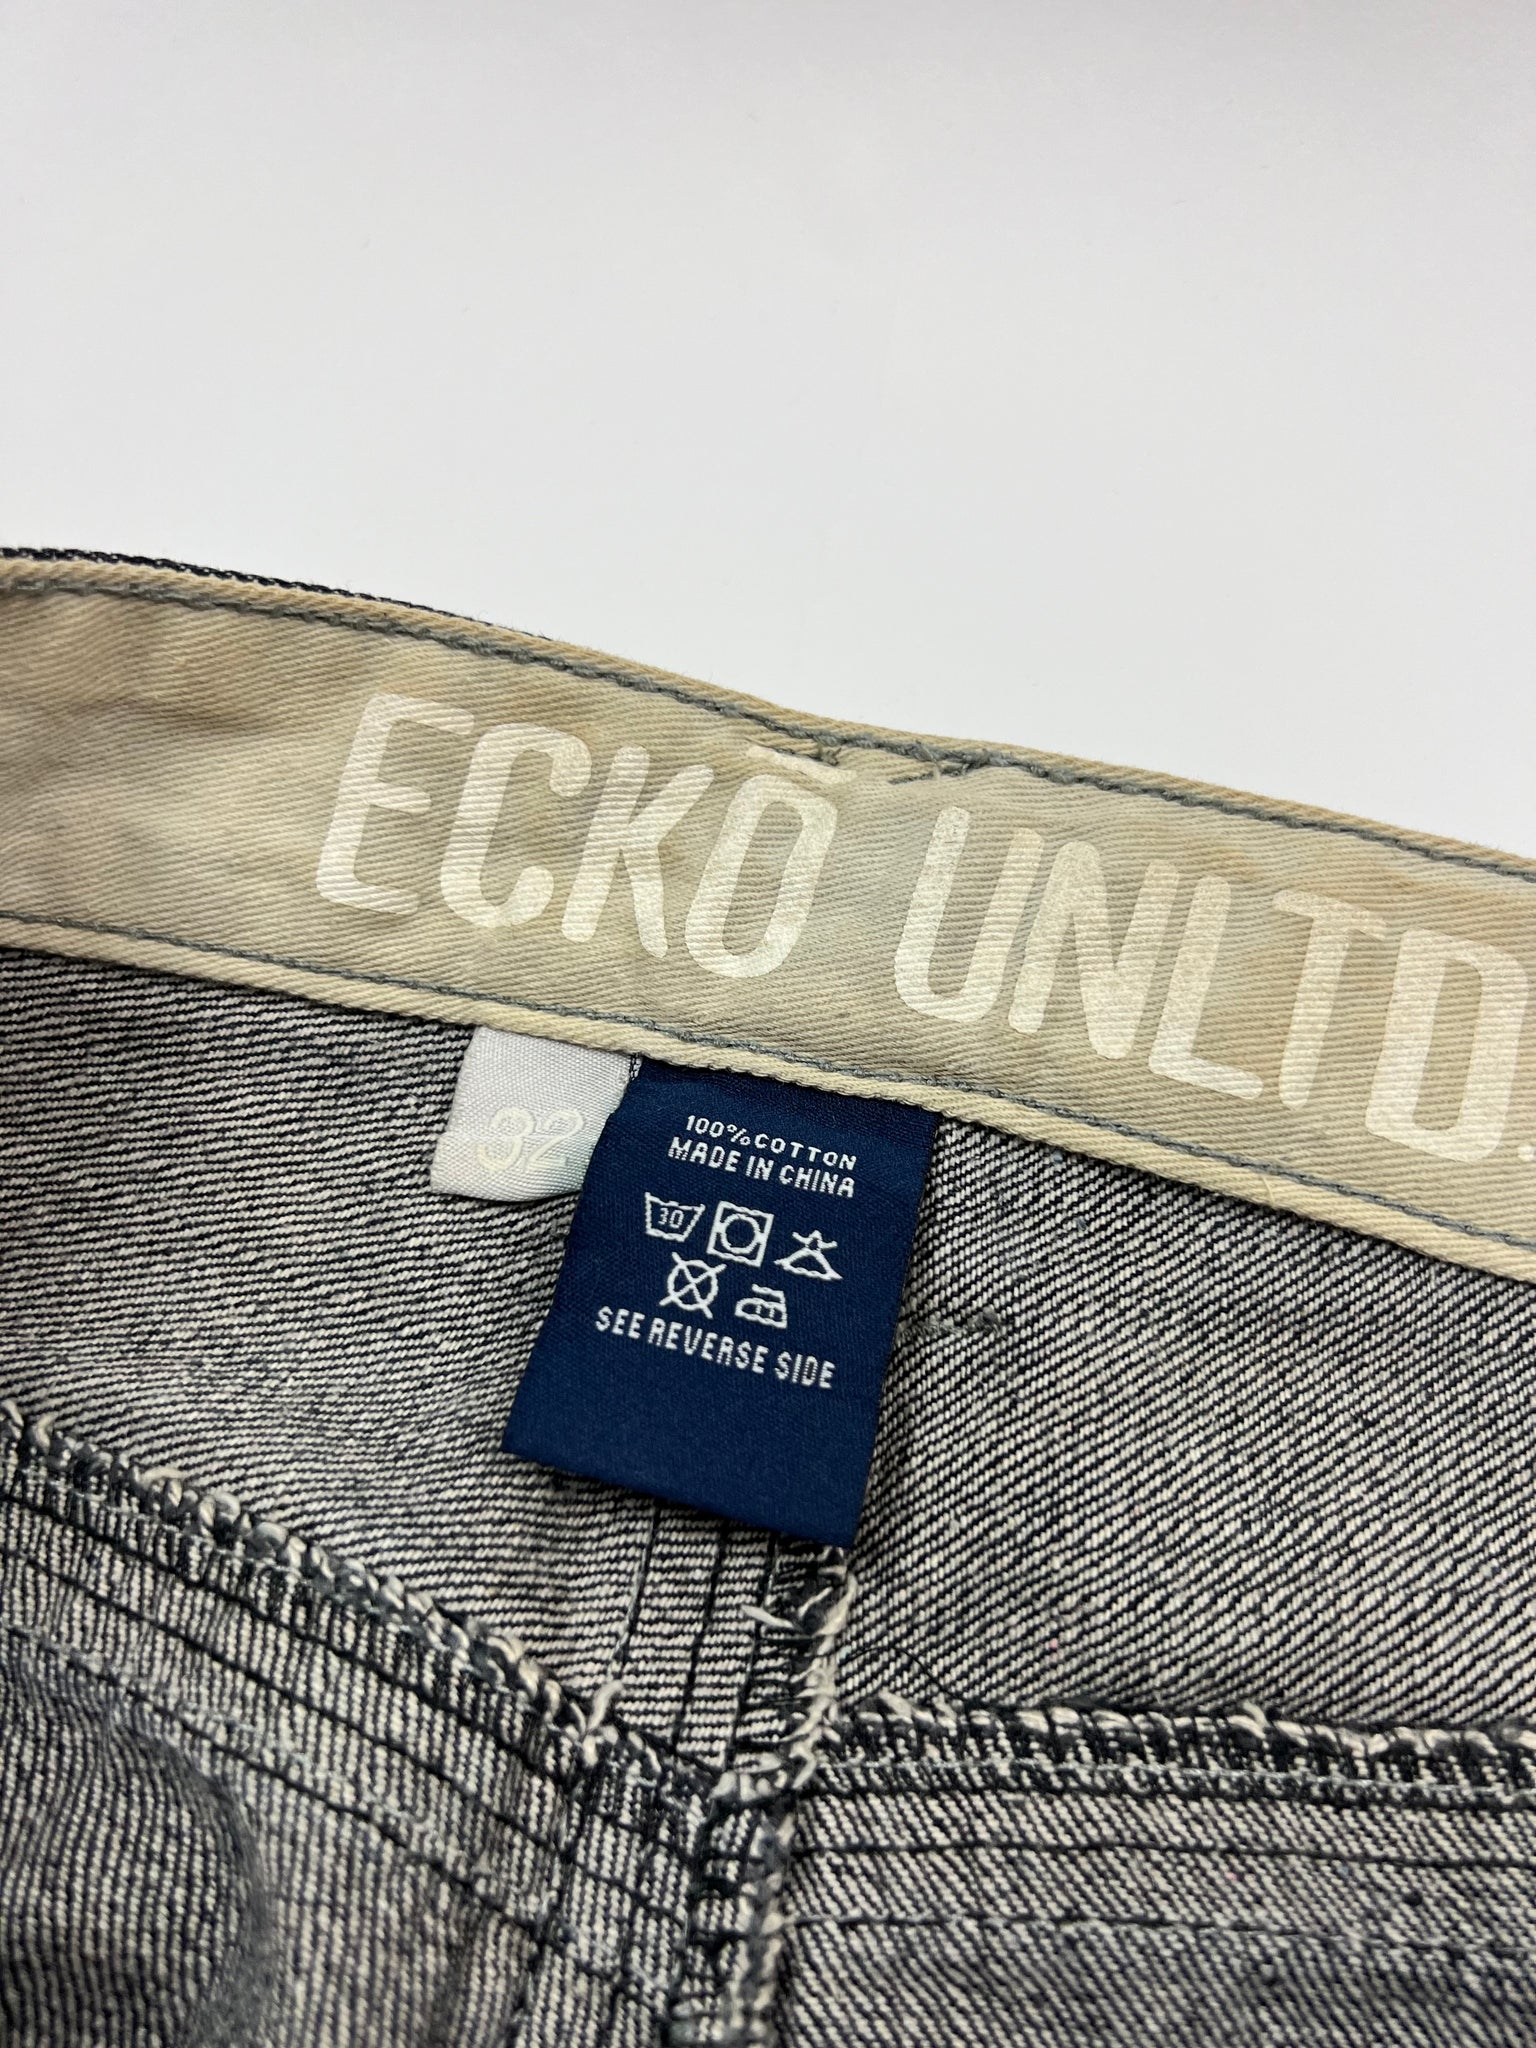 Ecko Untld. Jeans (32)